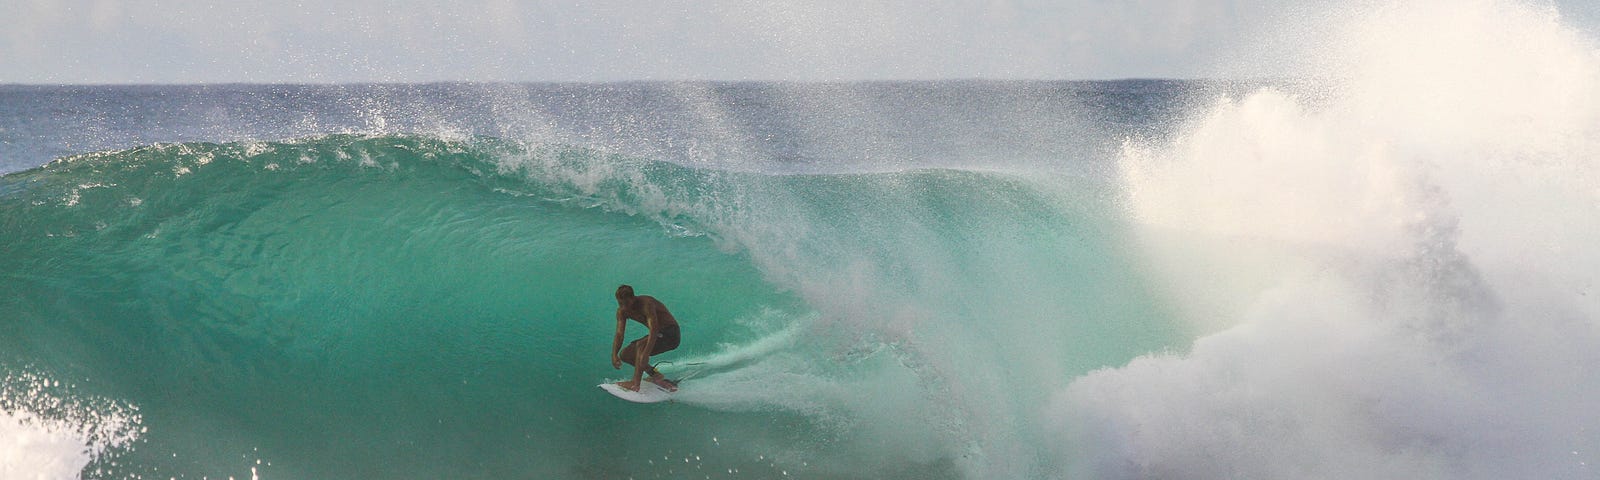 Pro surfer being barrelled.